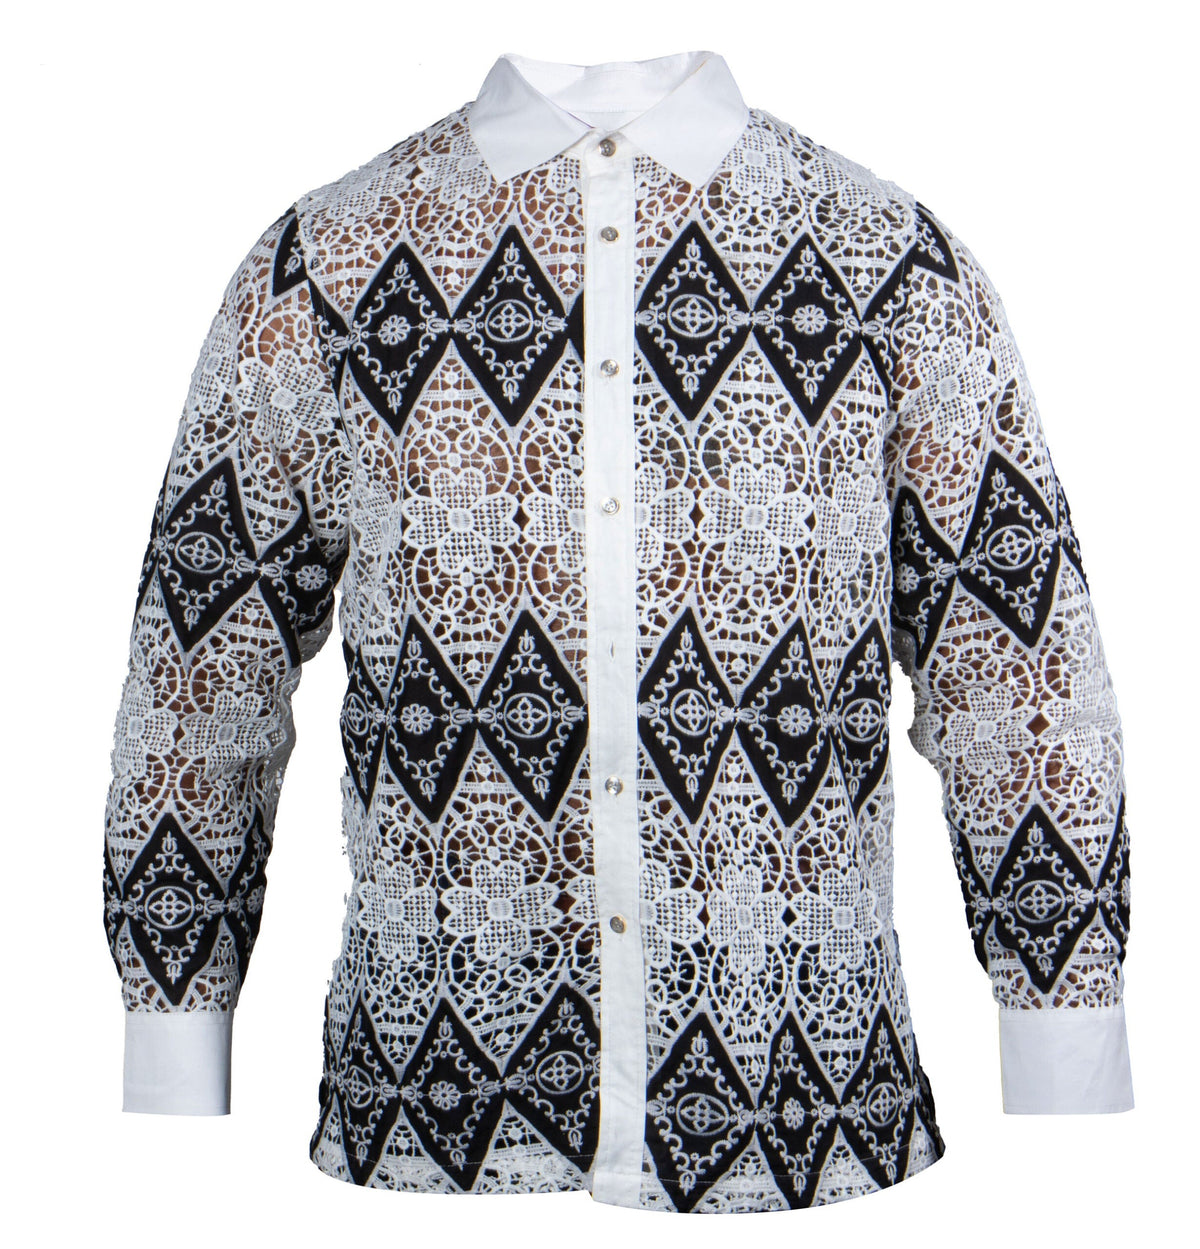 Prestige White Sacred Geometry Lace Button Up Shirt - Dudes Boutique